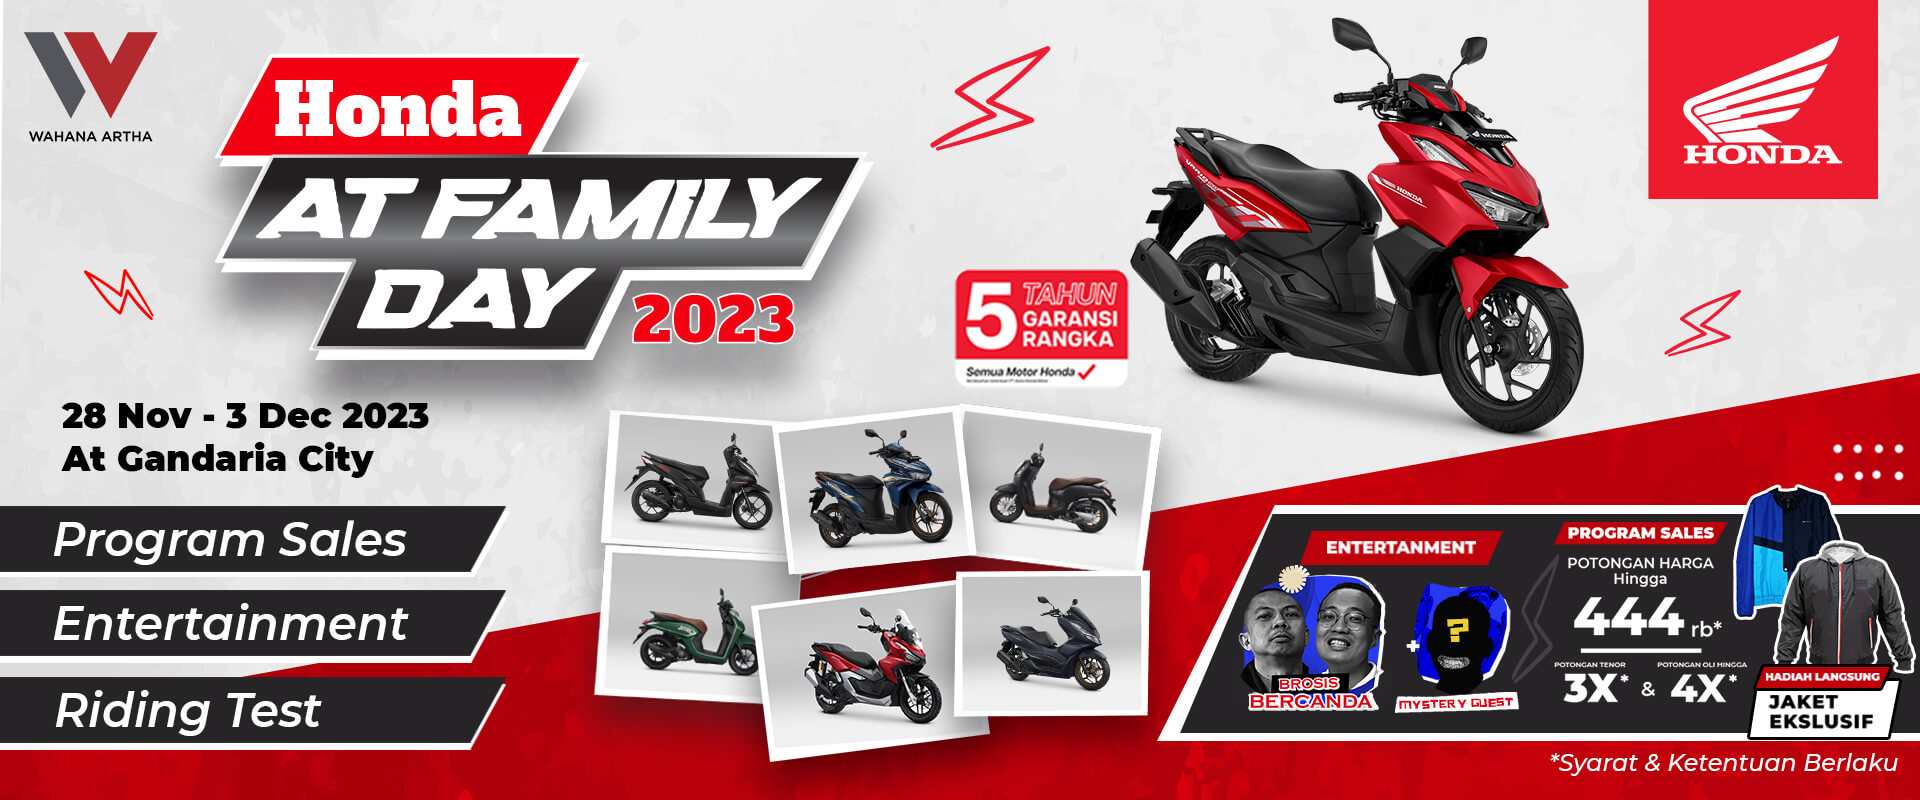 Honda AT Family Day 2023 - Gandaria City